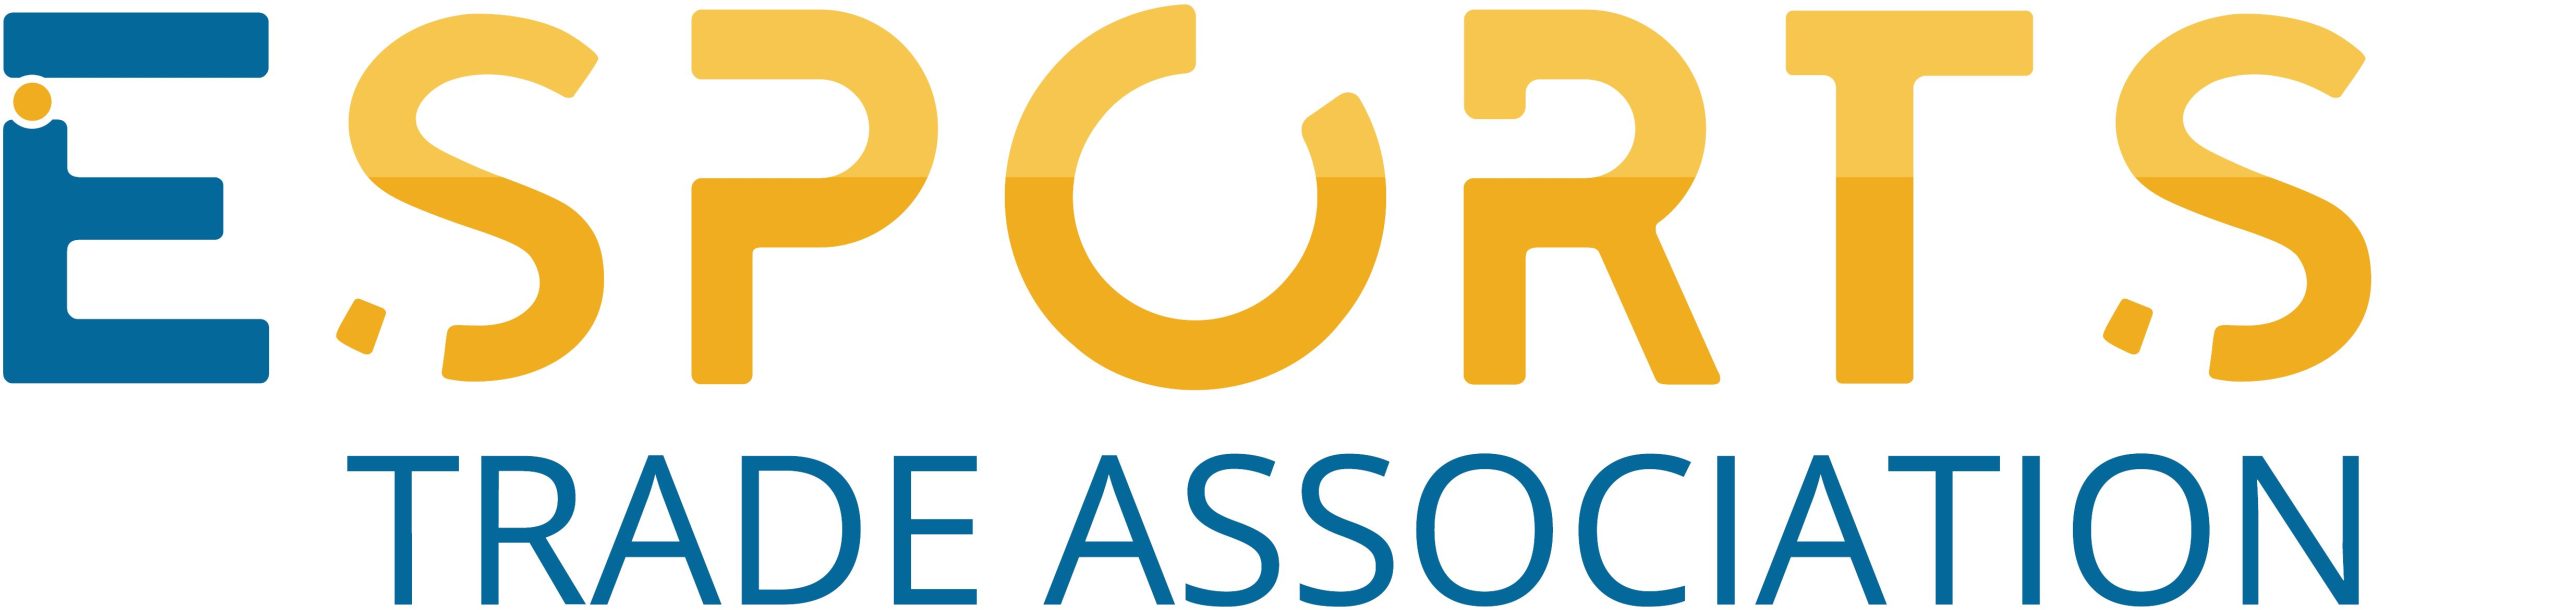 Esports Trade Association Logo